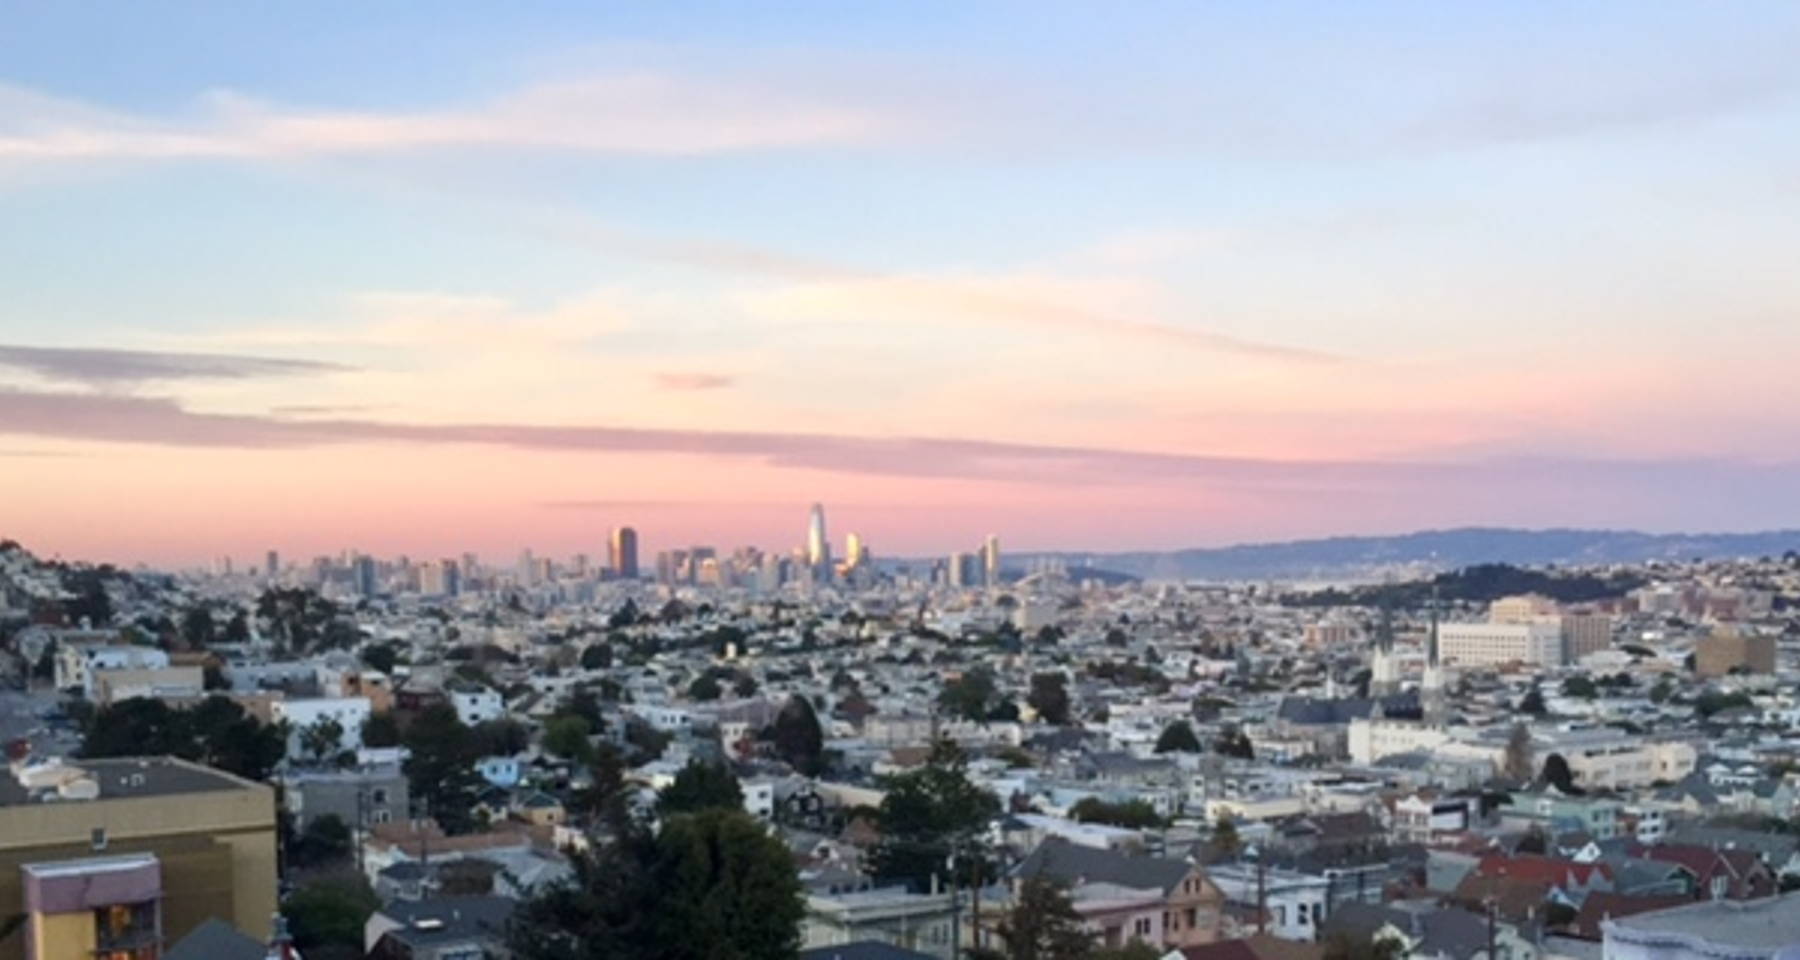 Watch the city lights glisten over San Francisco